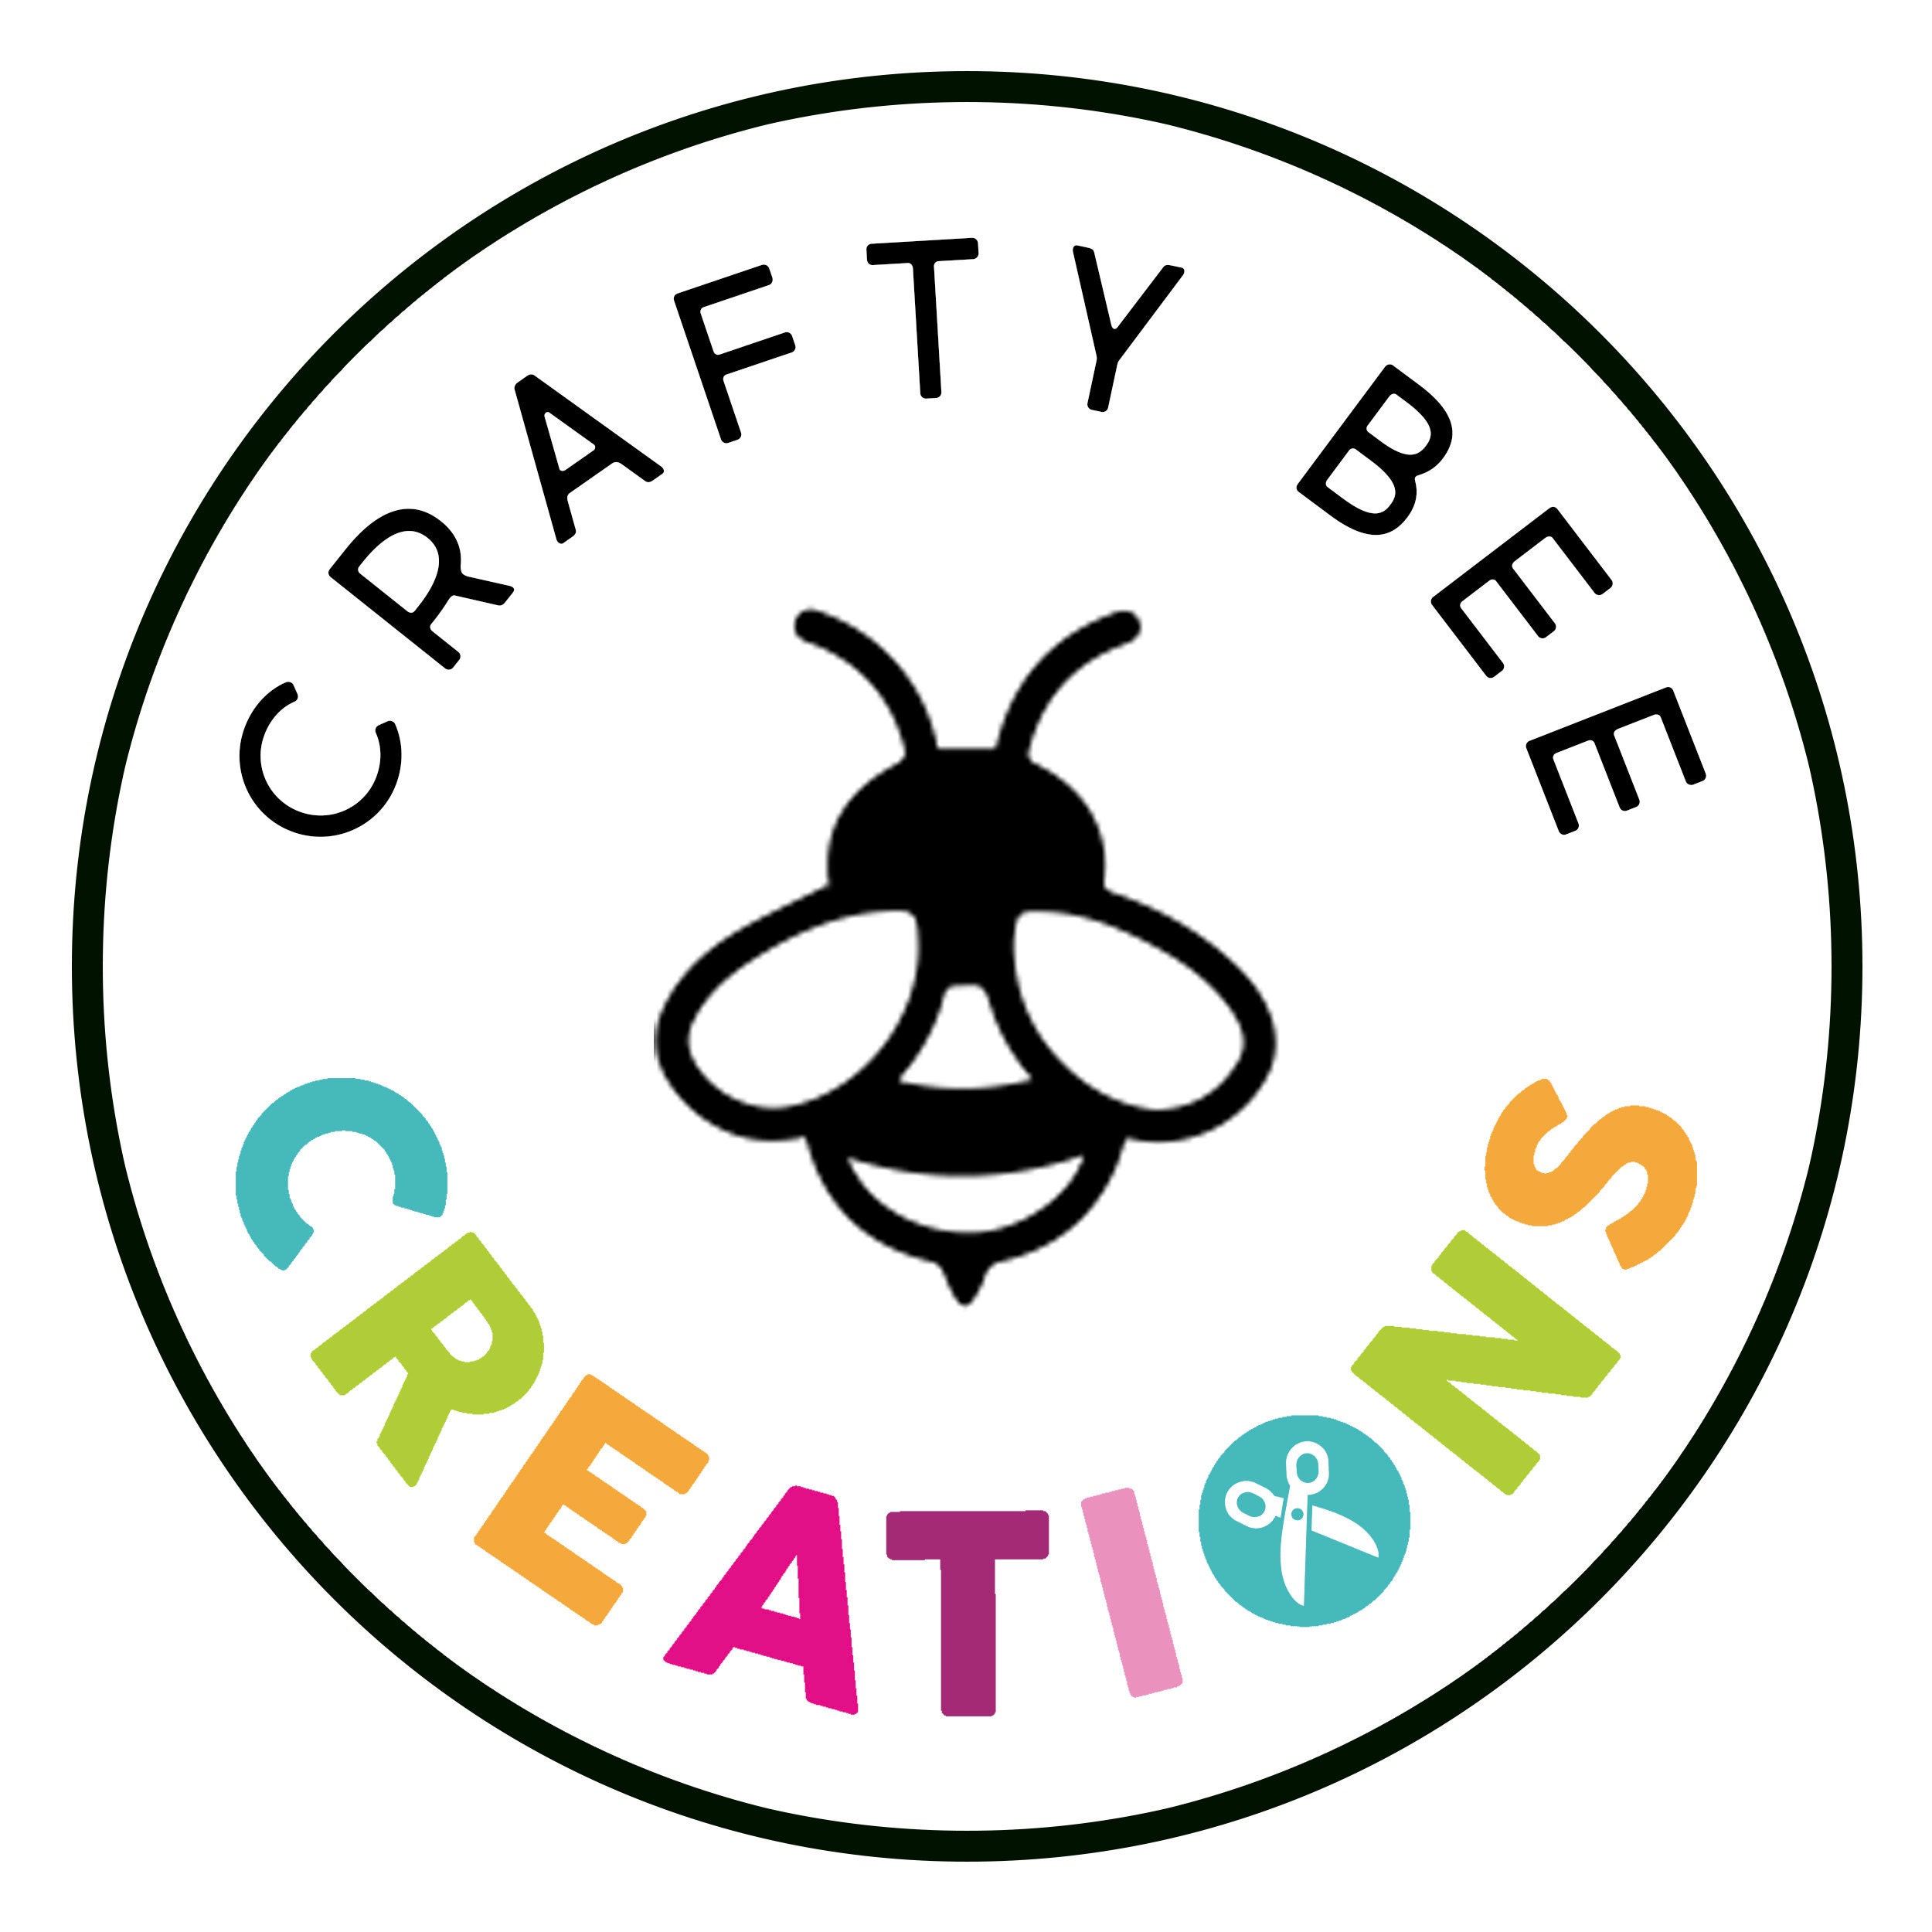 Caveman and Cavegirl Craft Activity - Crafty Bee Creations